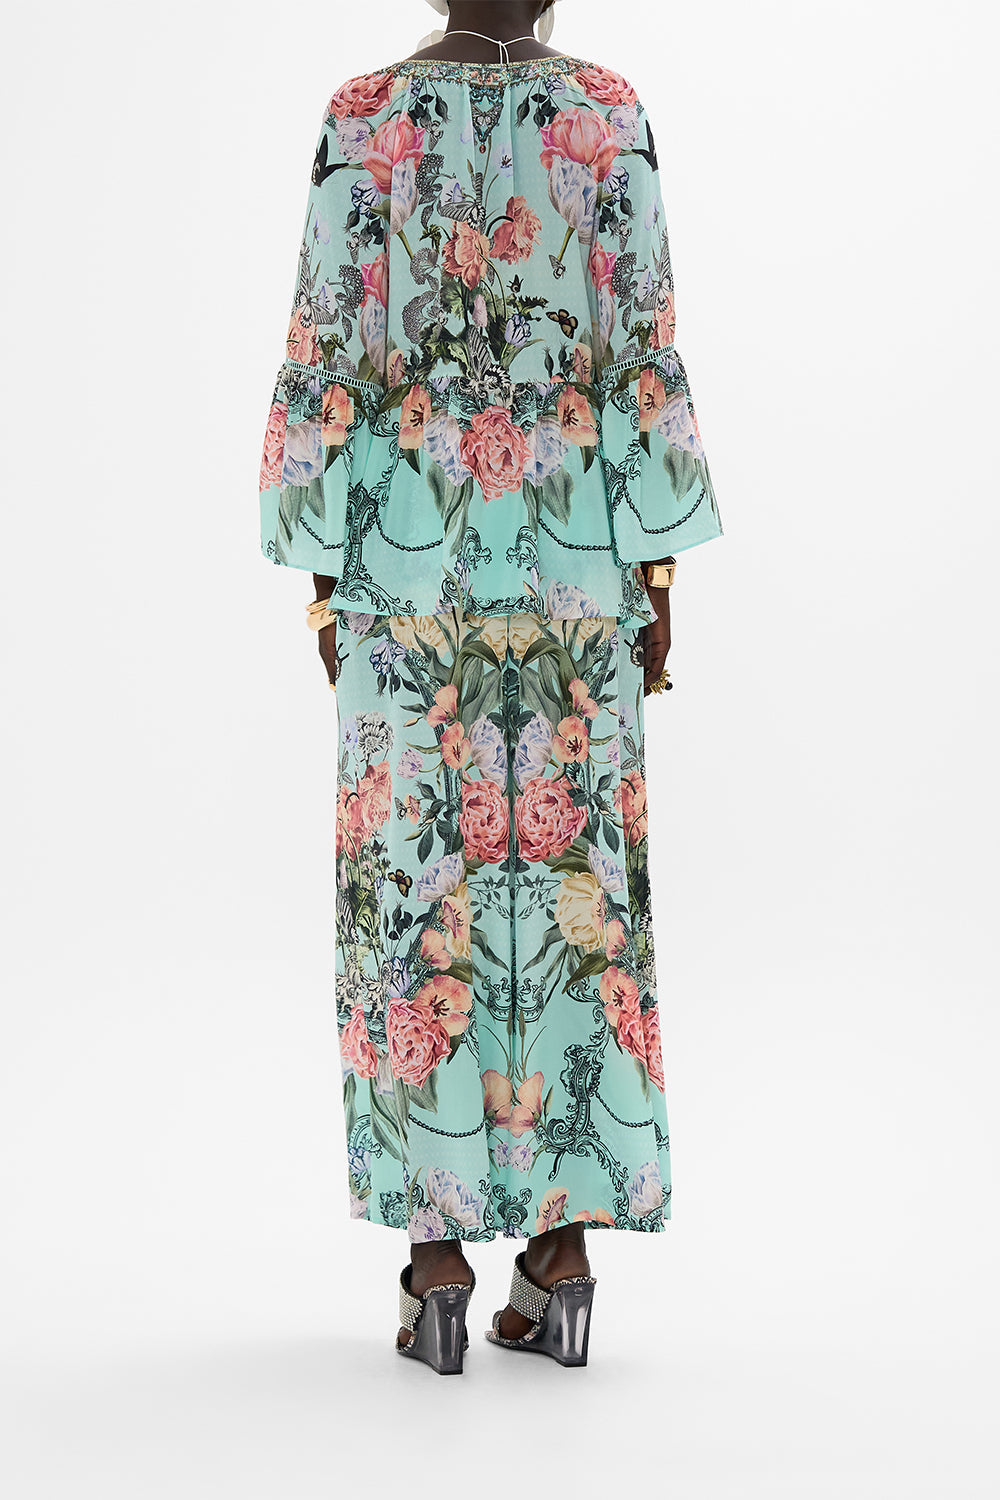 CAMILLA silk floral blouse in Petal Promiseland print